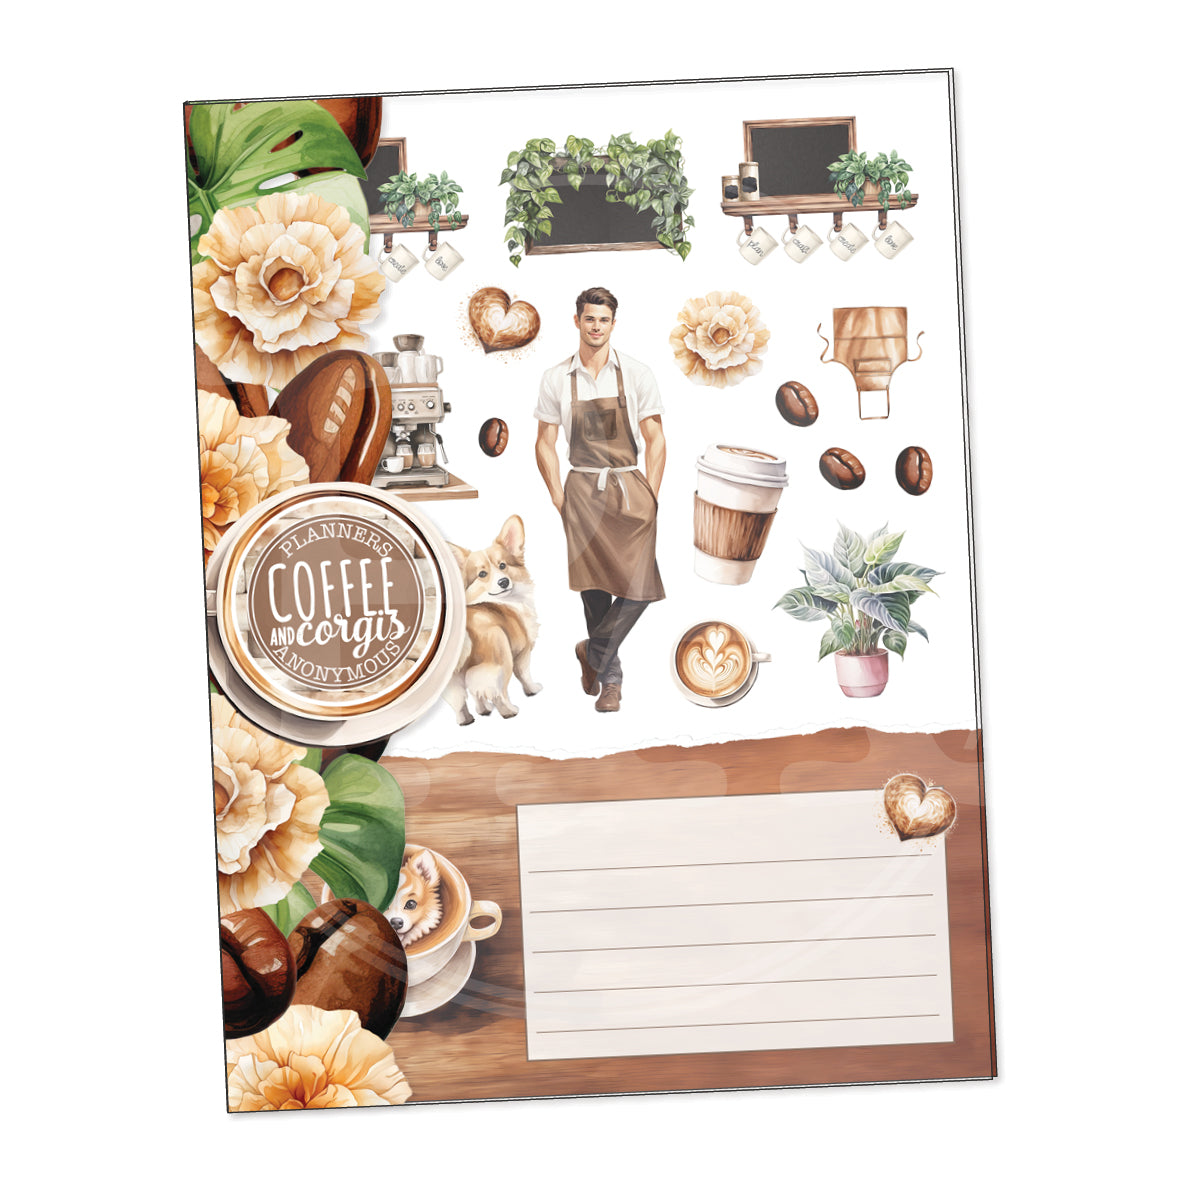 Coffee and Corgis planner sticker book